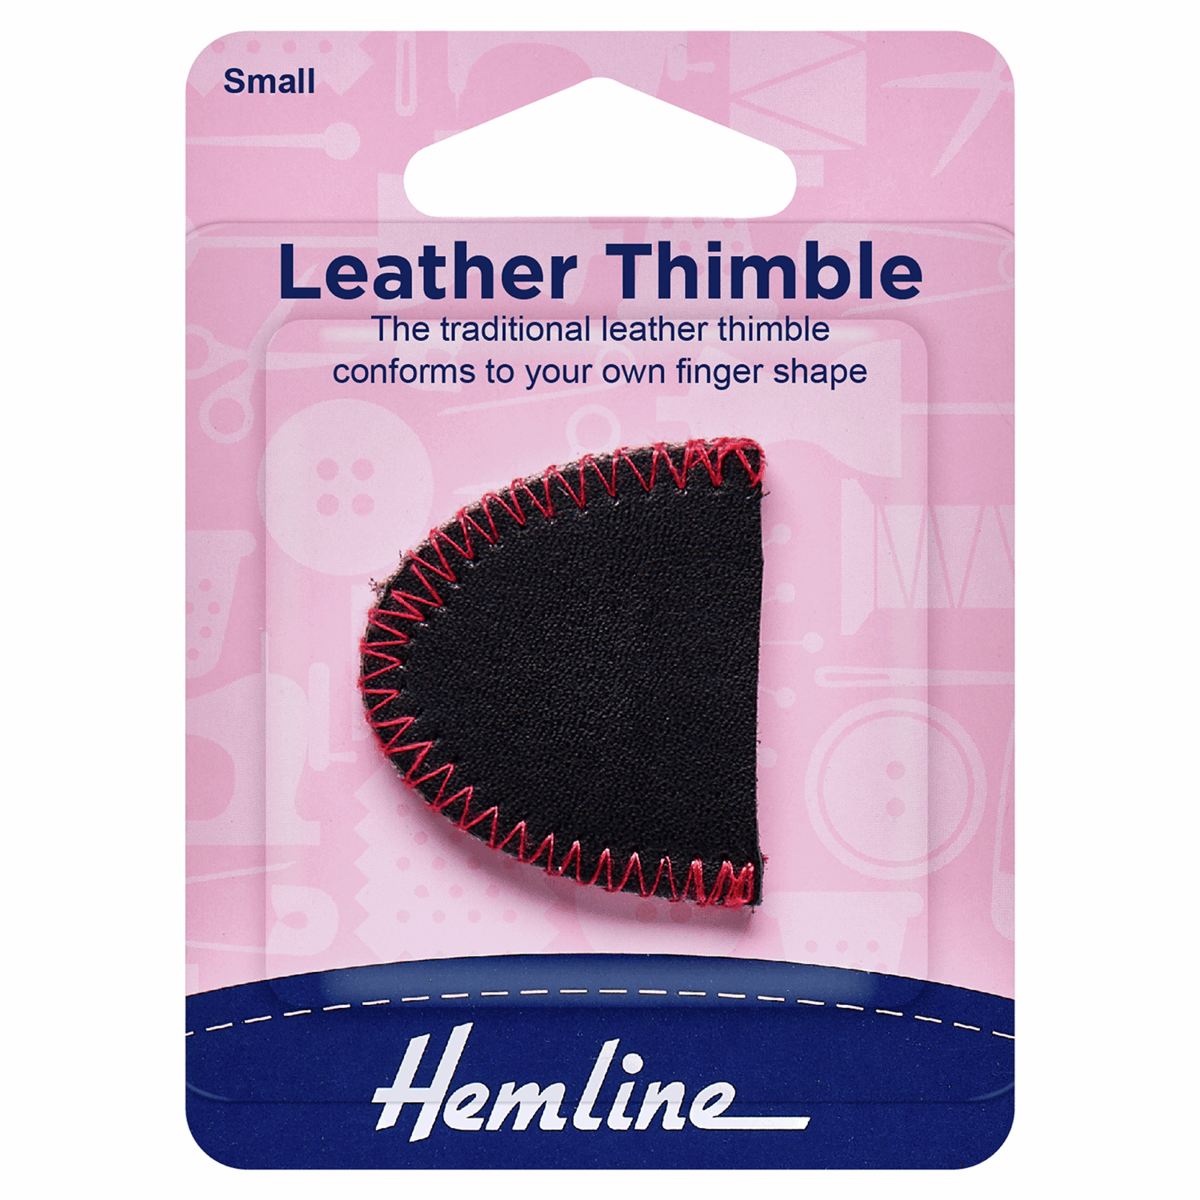 Hemline Leather Thimble - Small